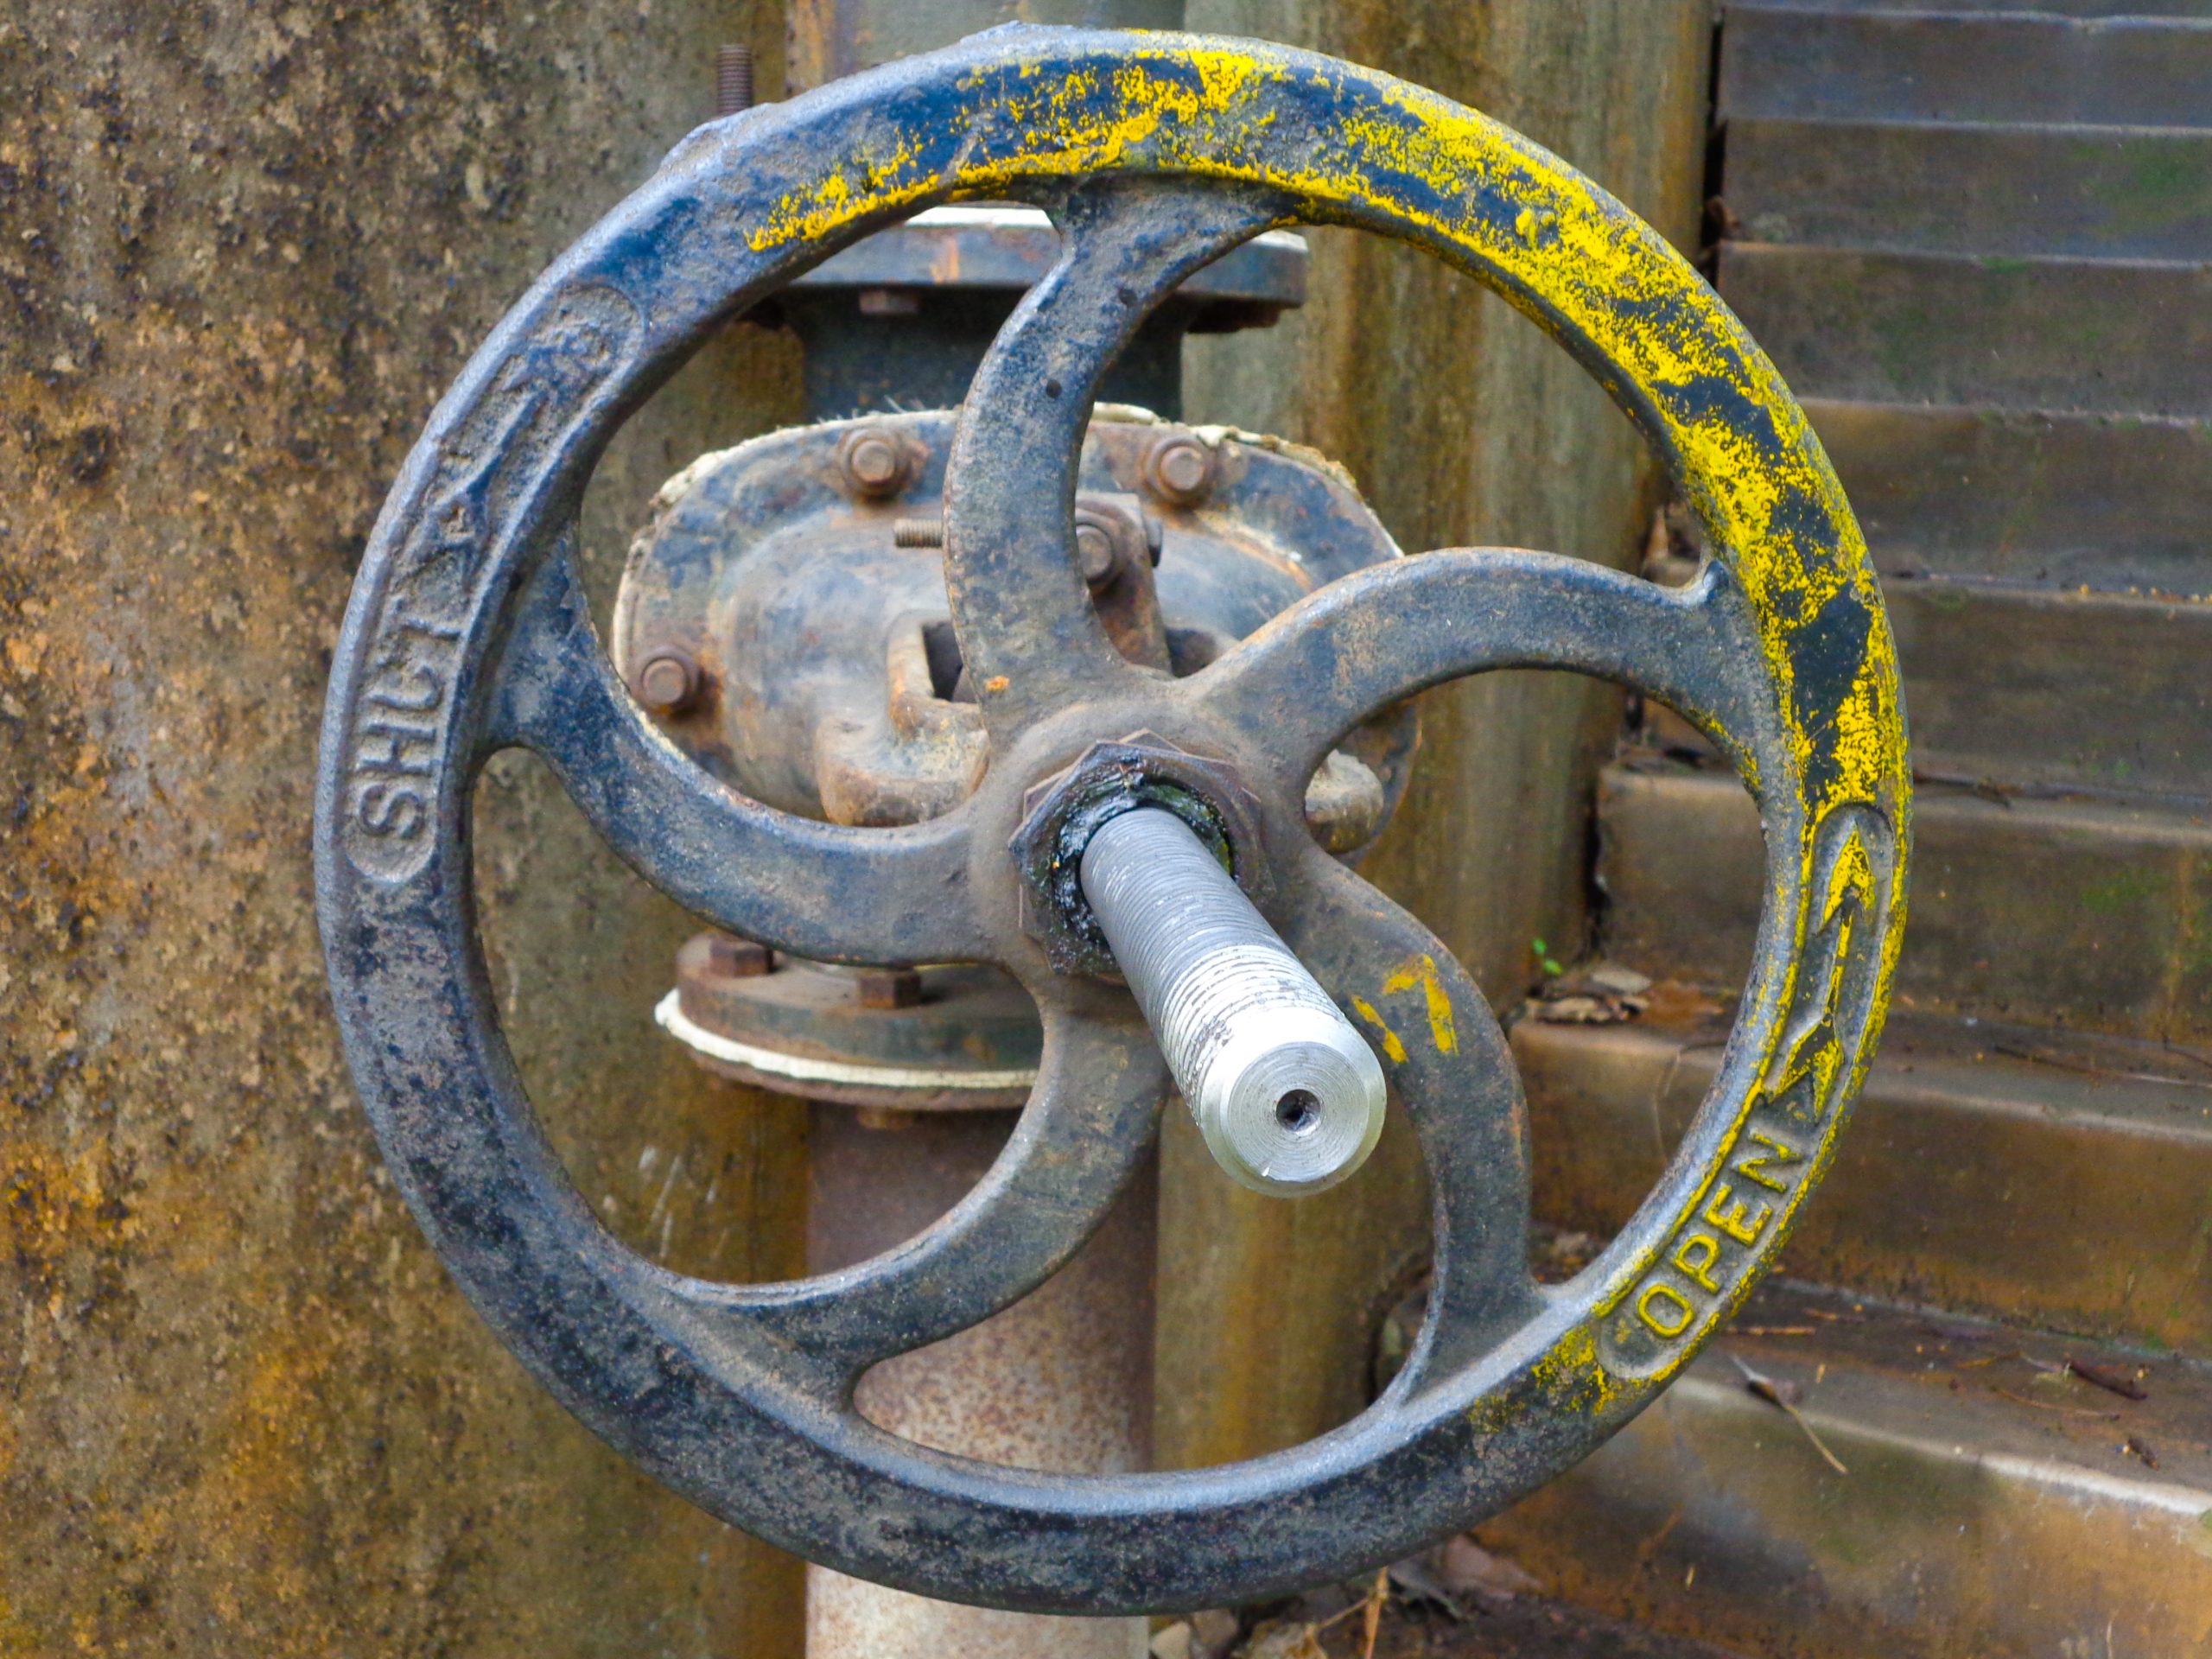 A mechanical wheel